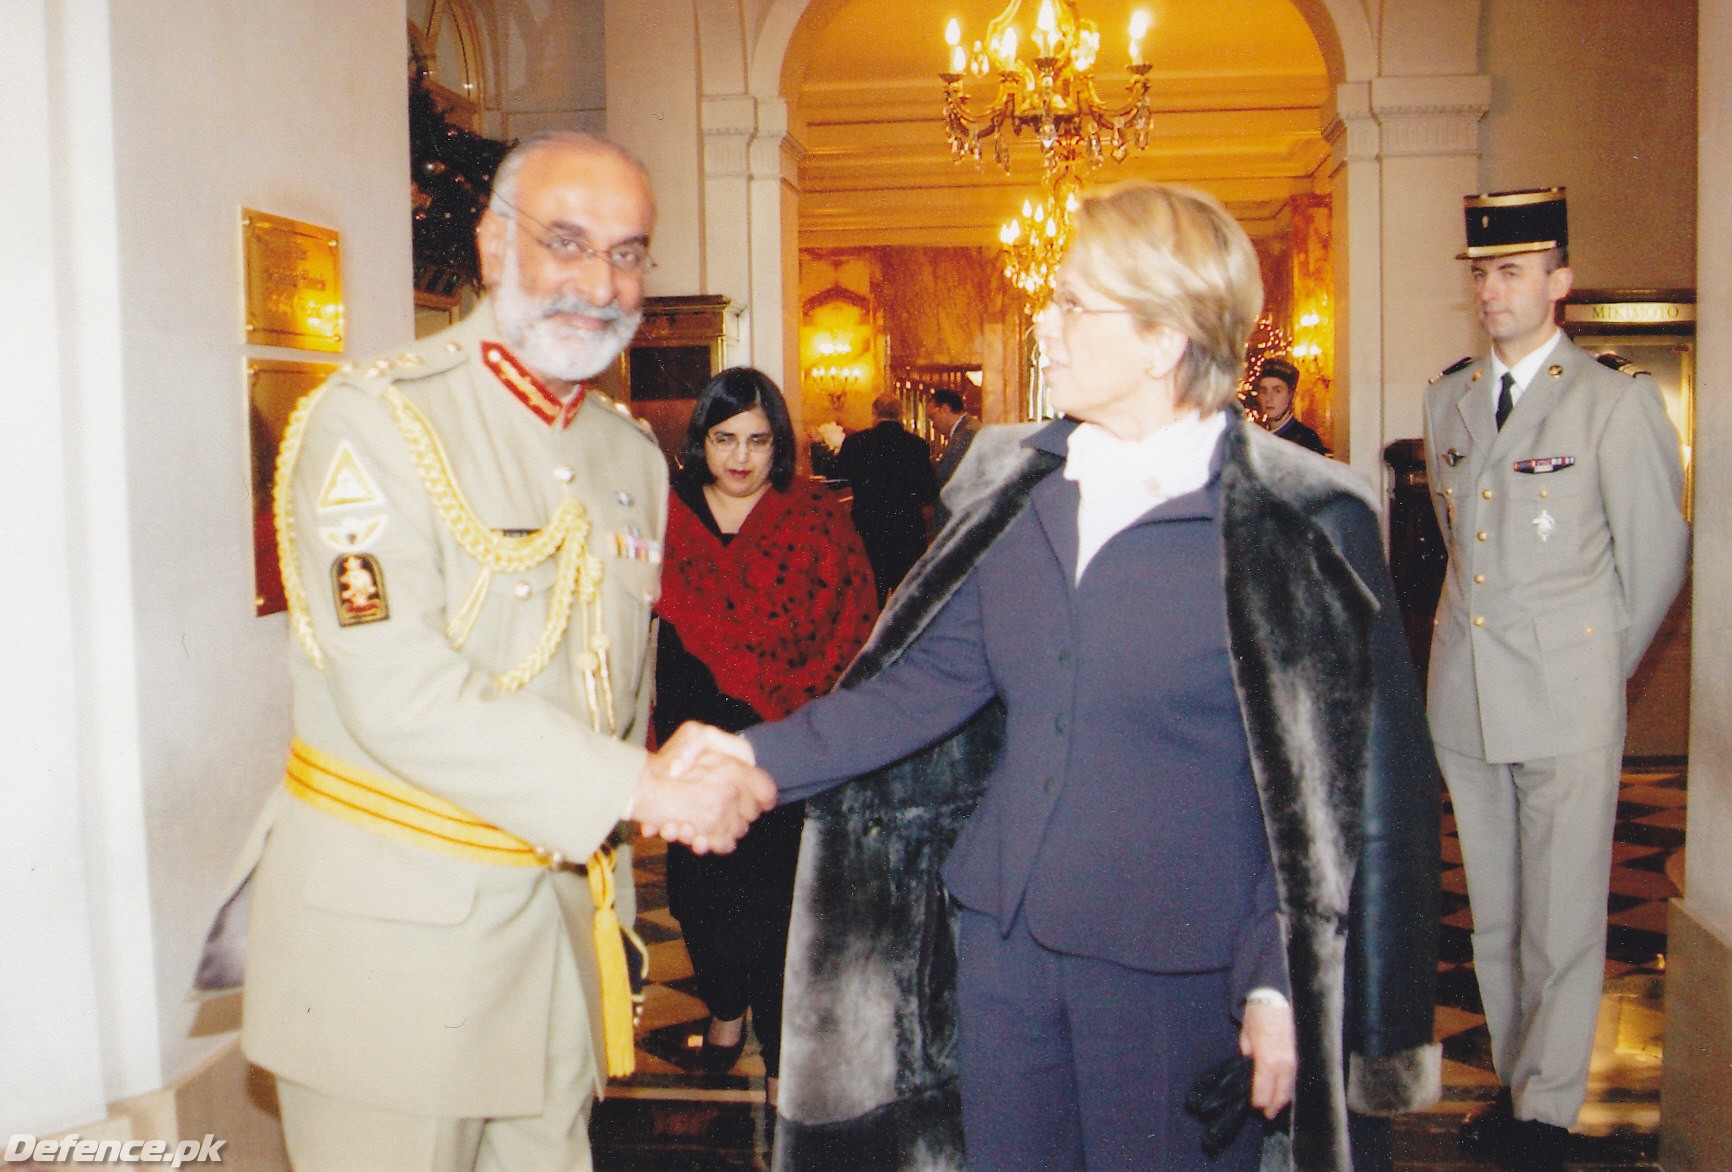 General TM Malik & Minister Michele Alliot-Marie